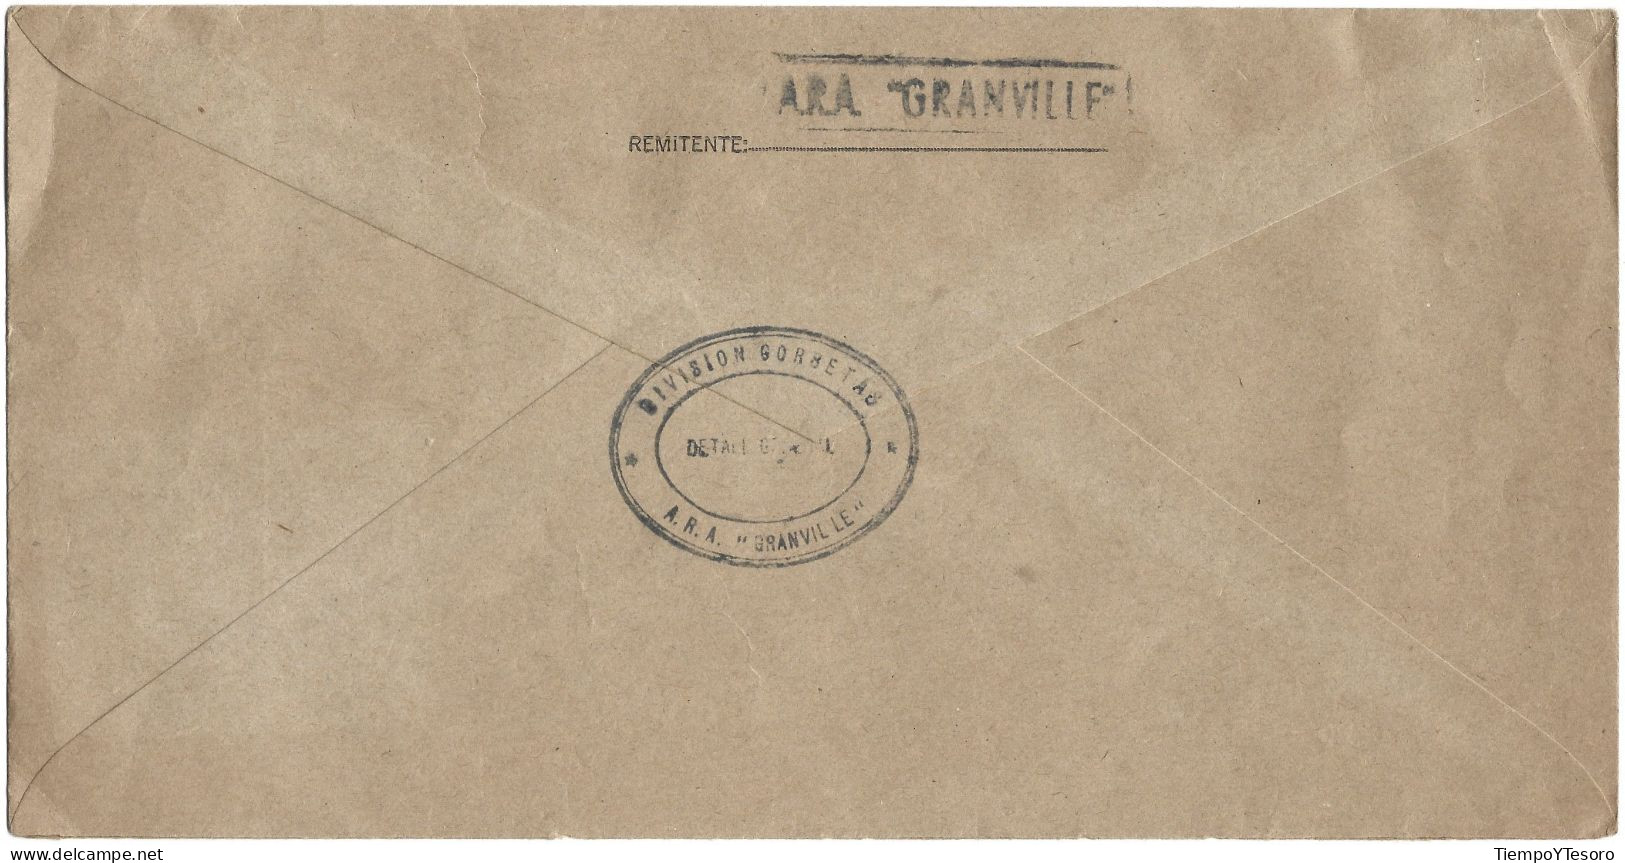 Correspondence - Argentina, Armada Argentina, ARA Granville,1997, N°220 - Gebraucht